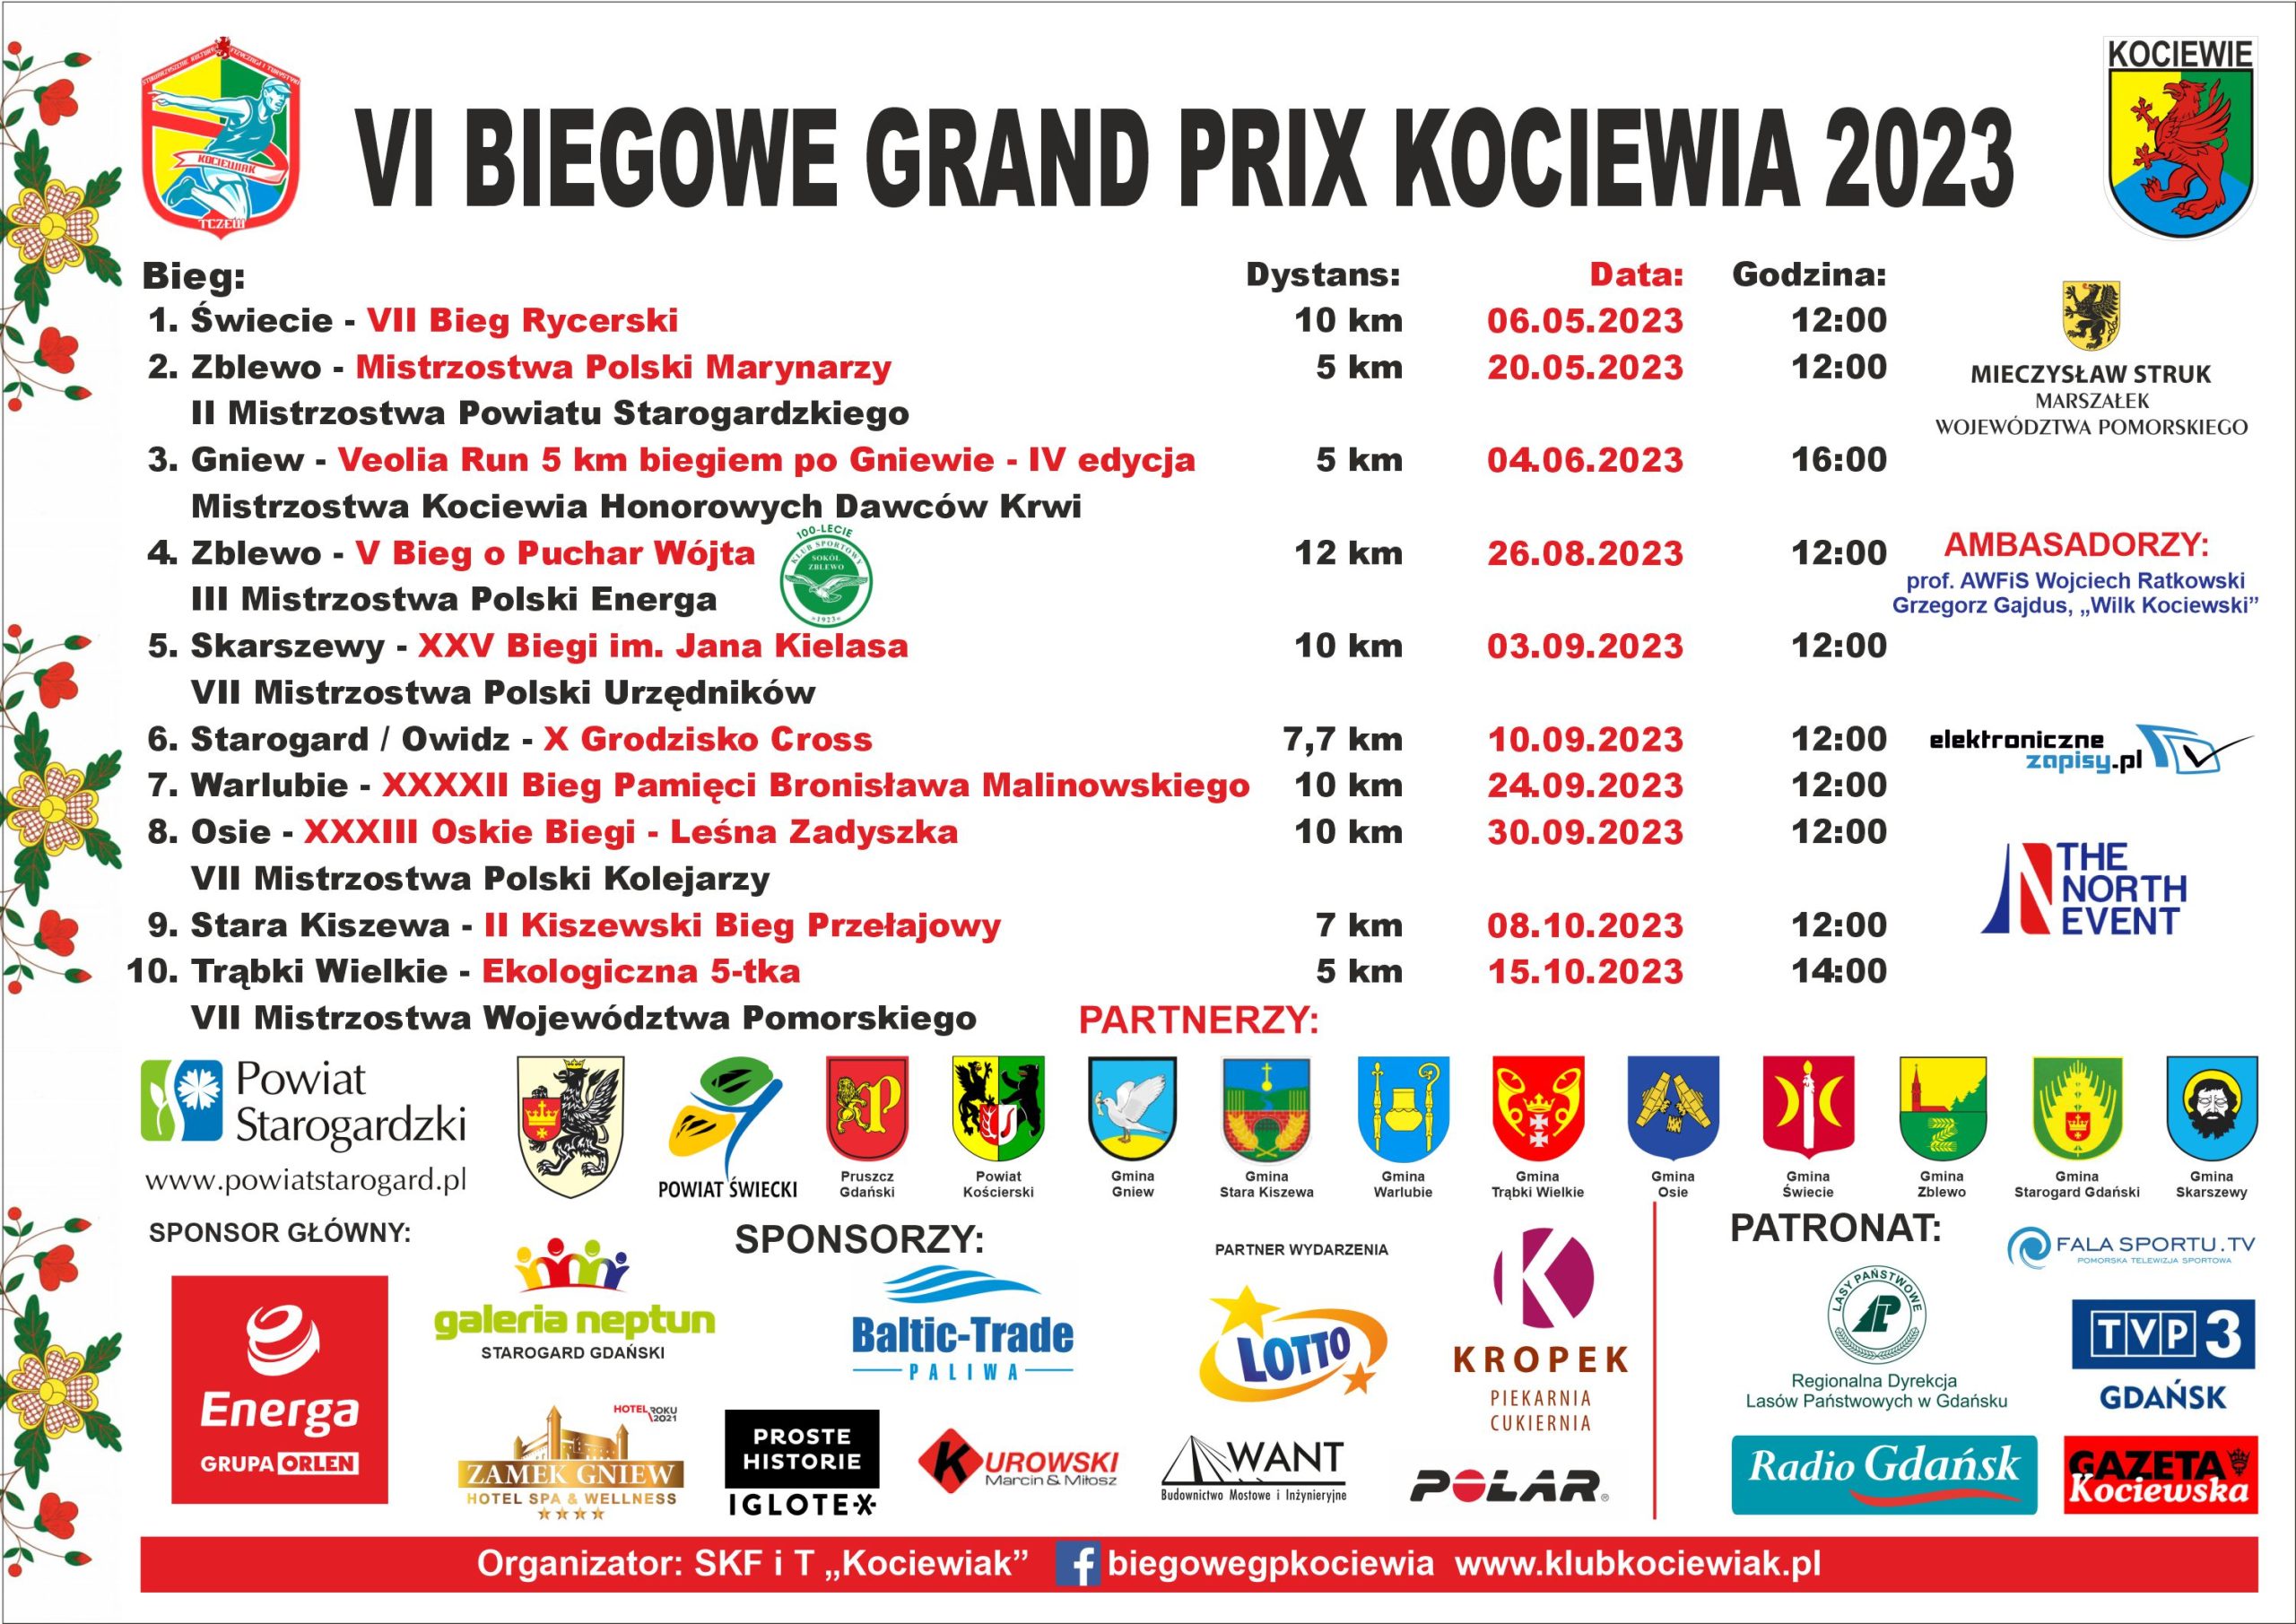 VI Biegowe Grand Prix Kociewia 2023